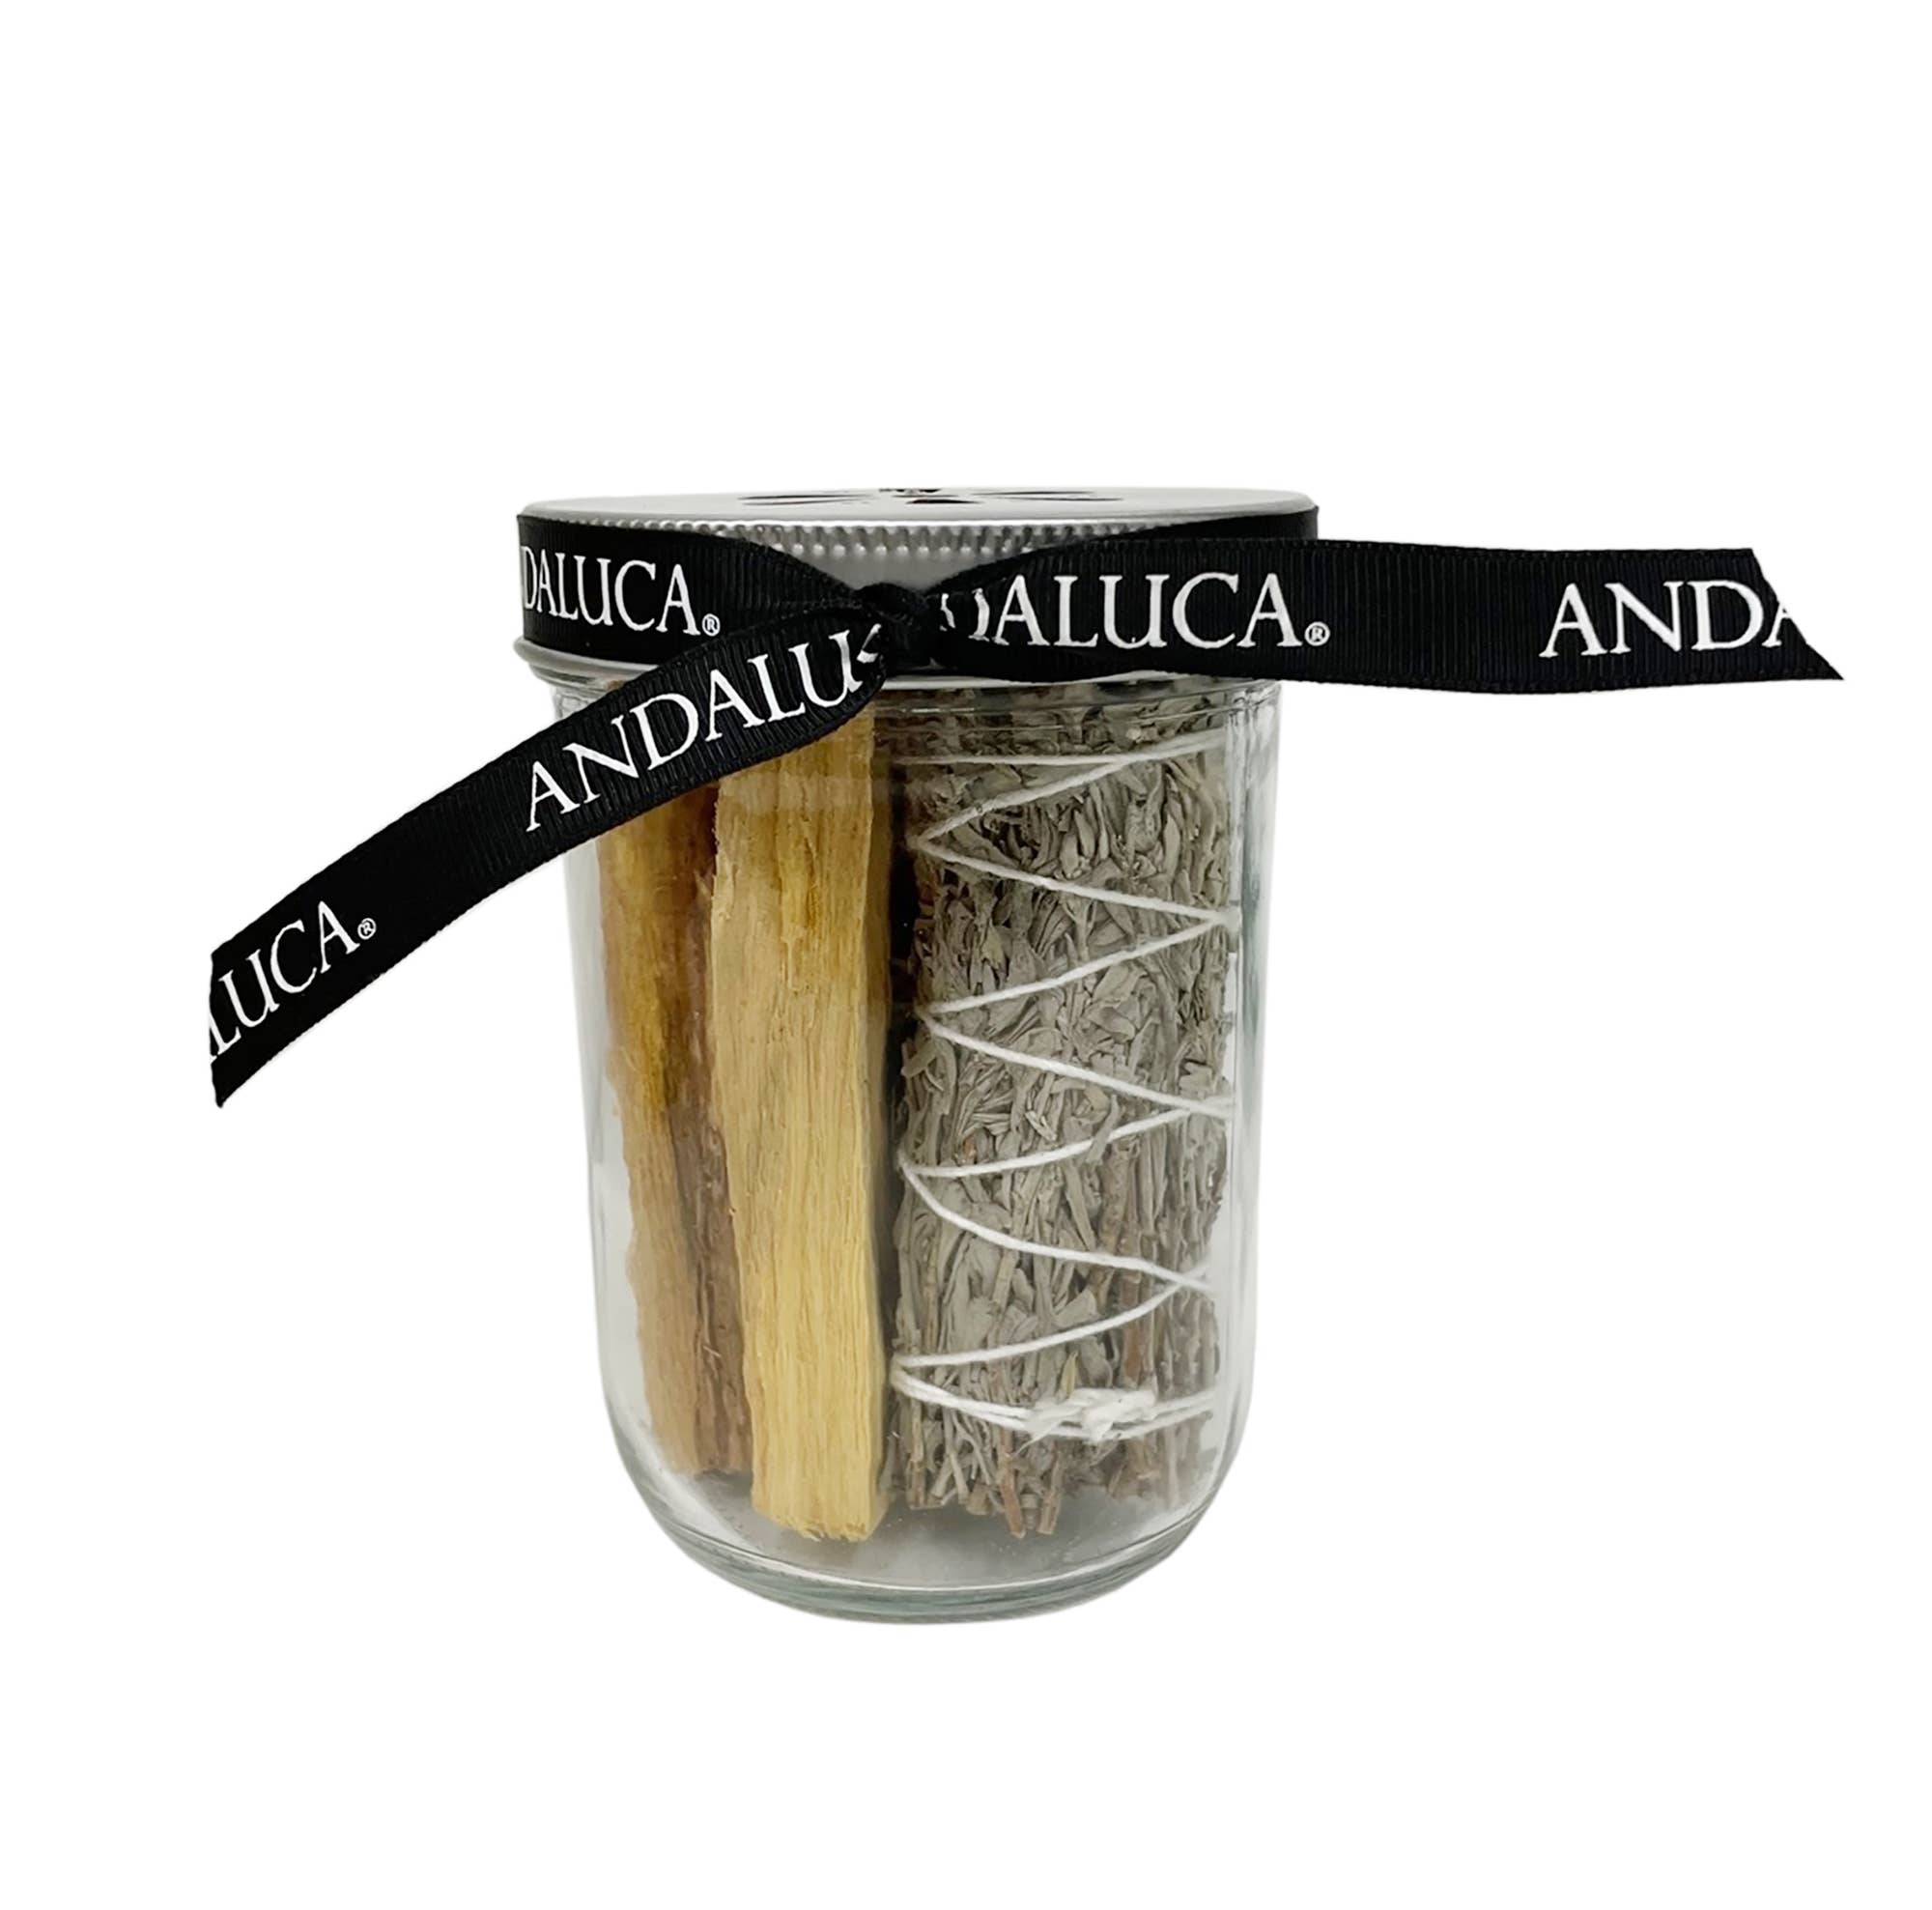 Andaluca - Sage and Palo Santo Smudging Jar Kit